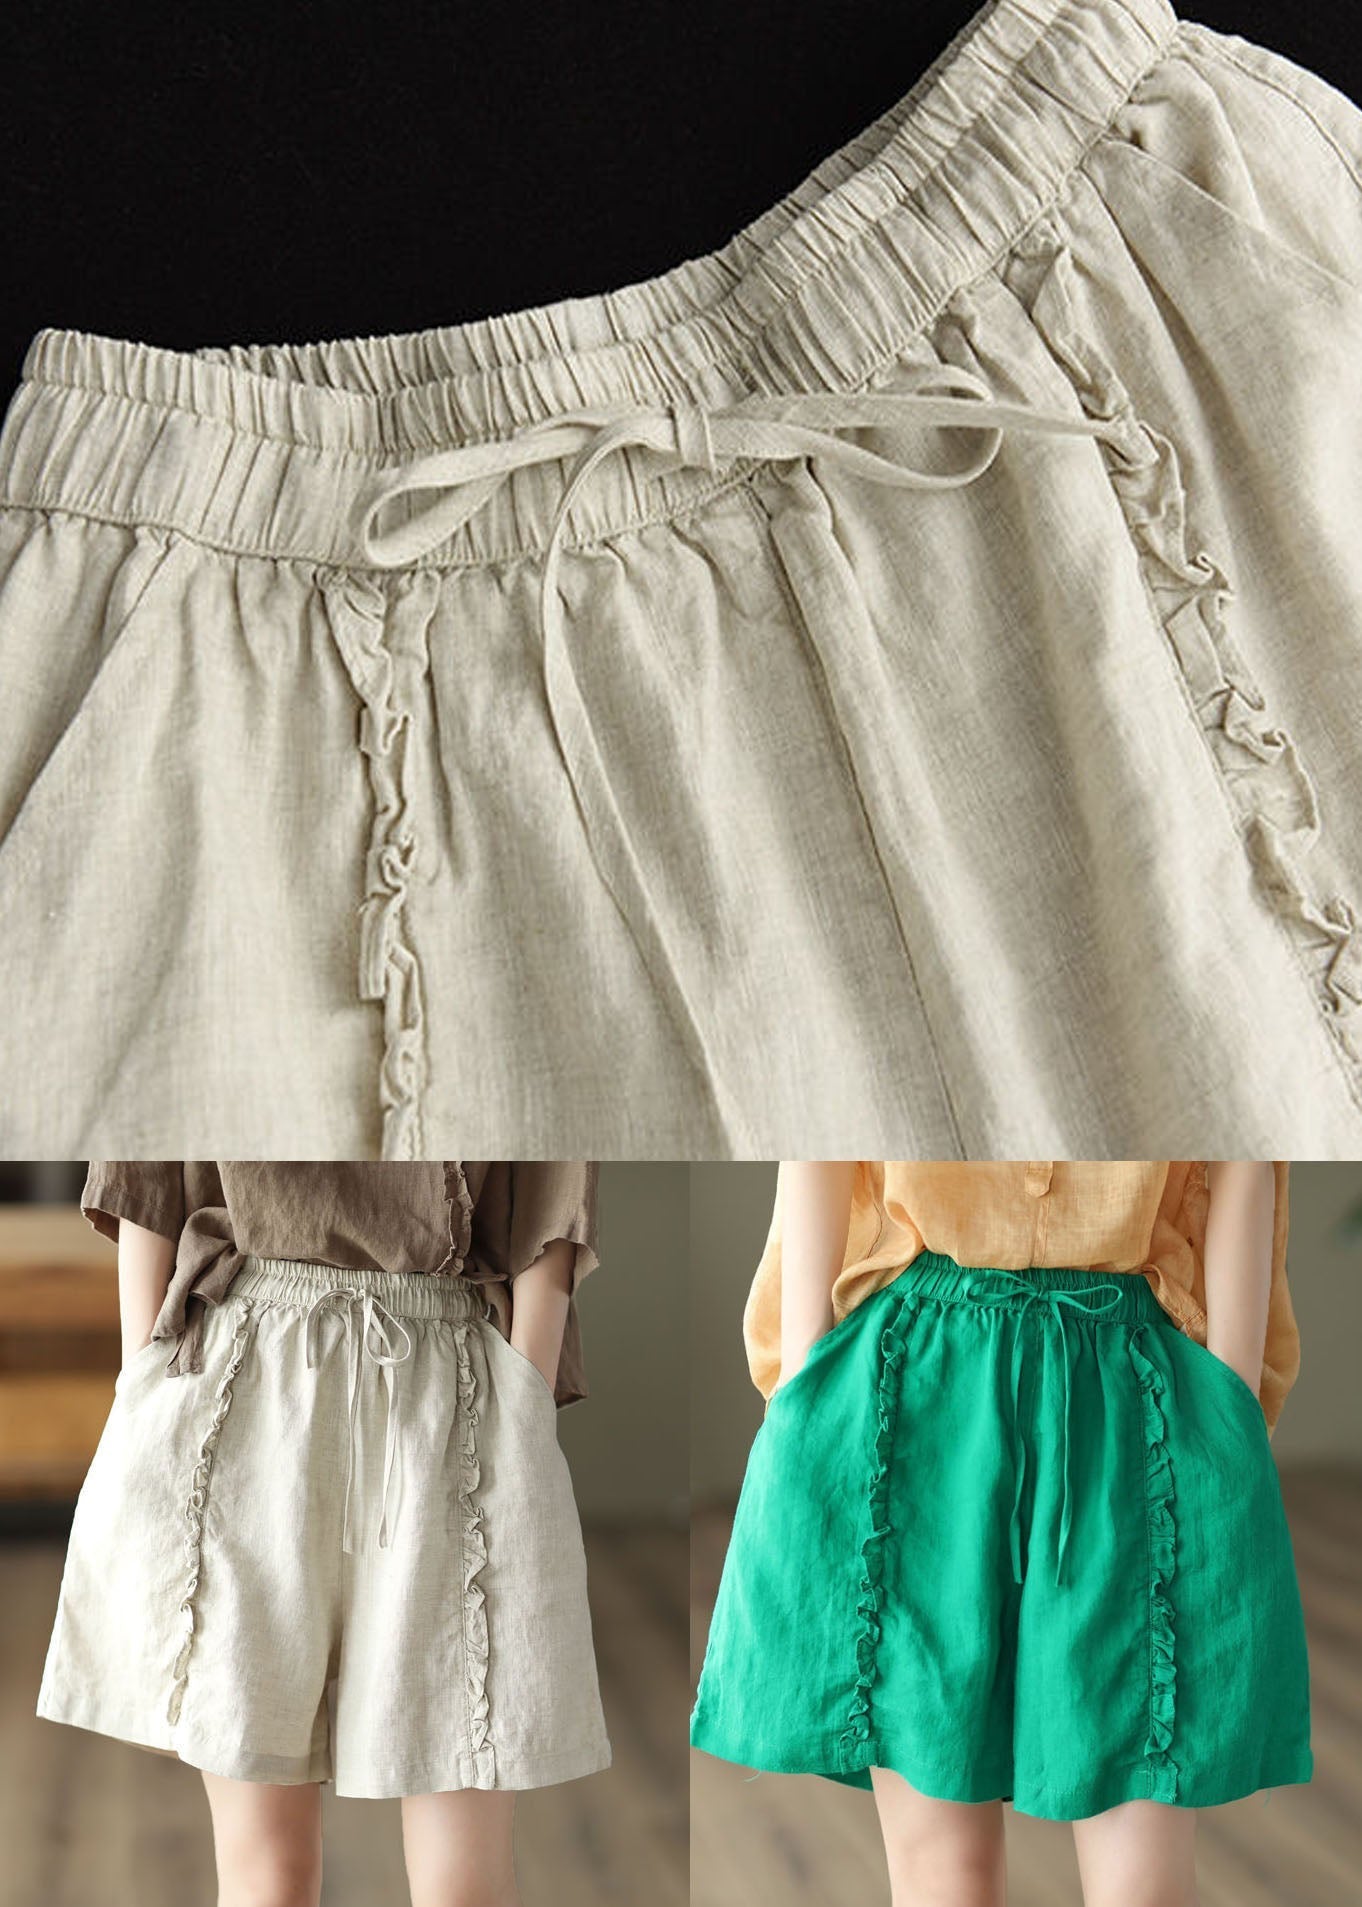 Beige Pockets Patchwork Linen Hot Pants Elastic Waist Summer LY0603 - fabuloryshop